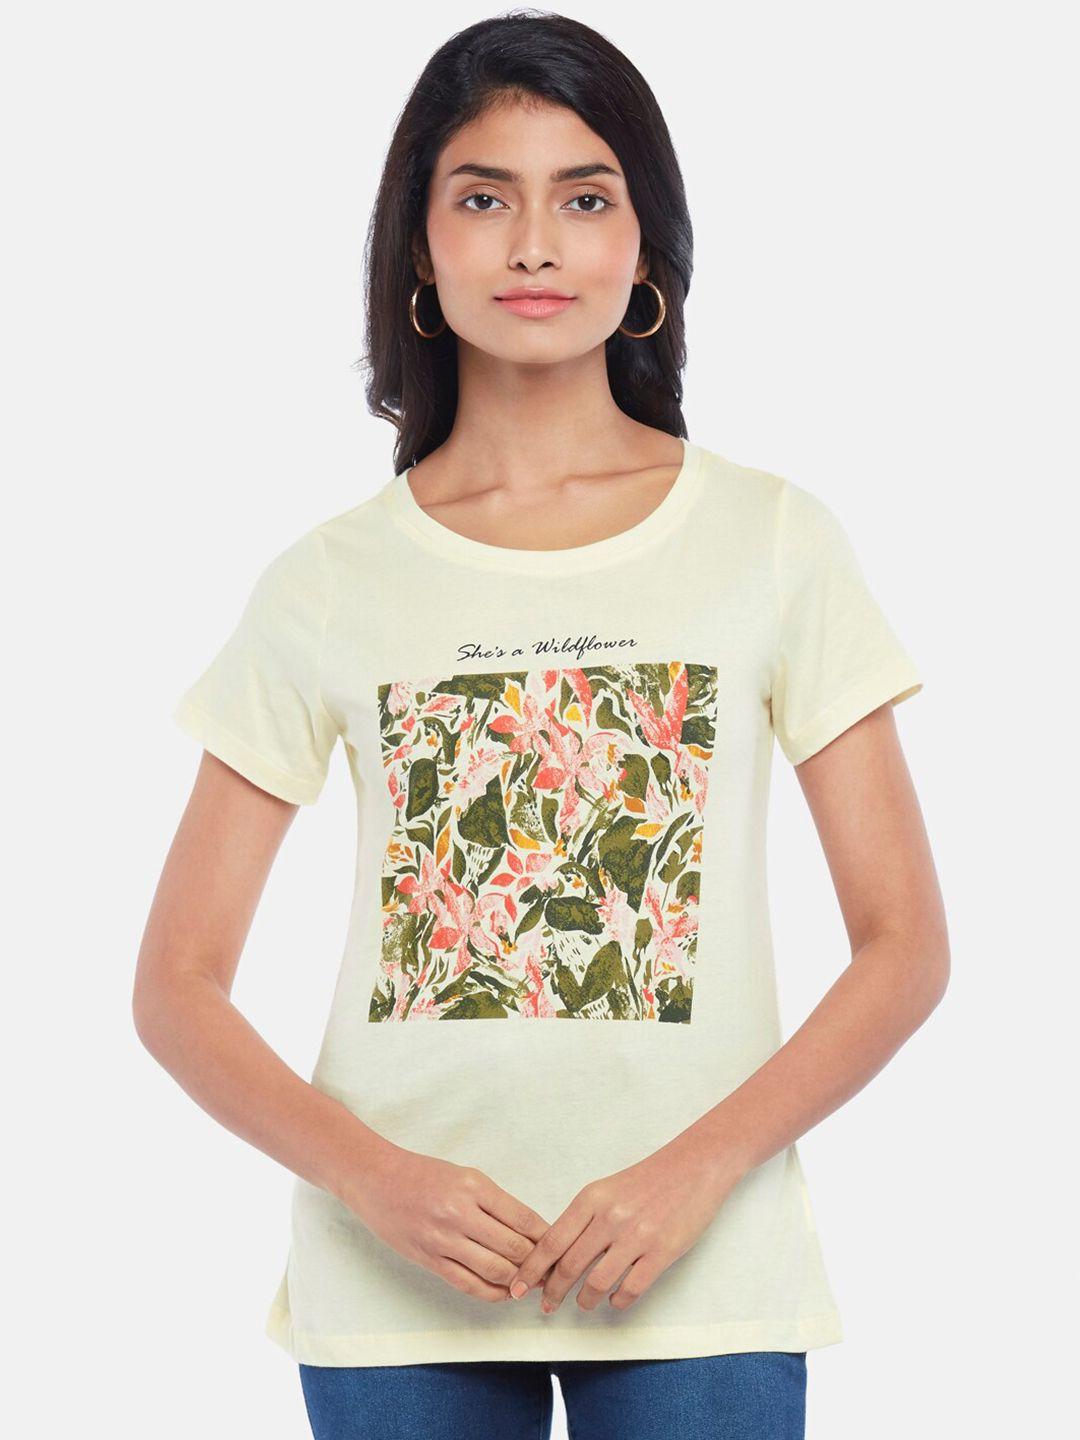 honey by pantaloons women yellow floral printed t-shirt